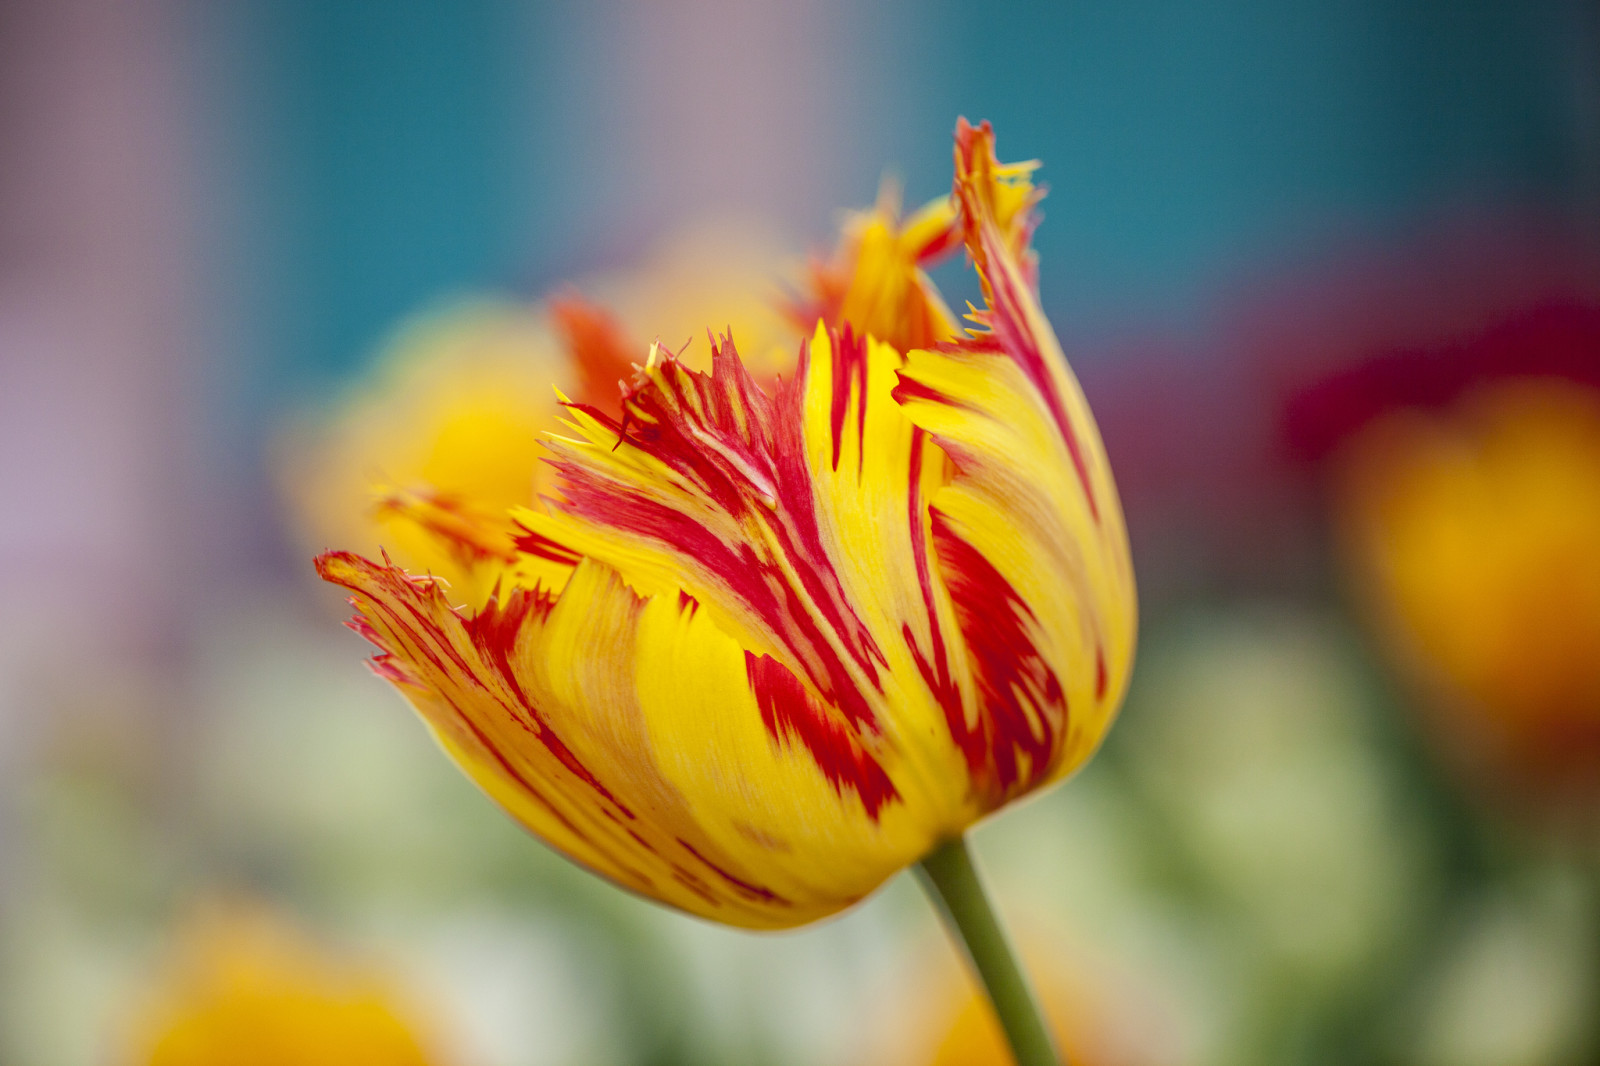 musim semi, bunga, Terry, kuning merah, Bunga tulp